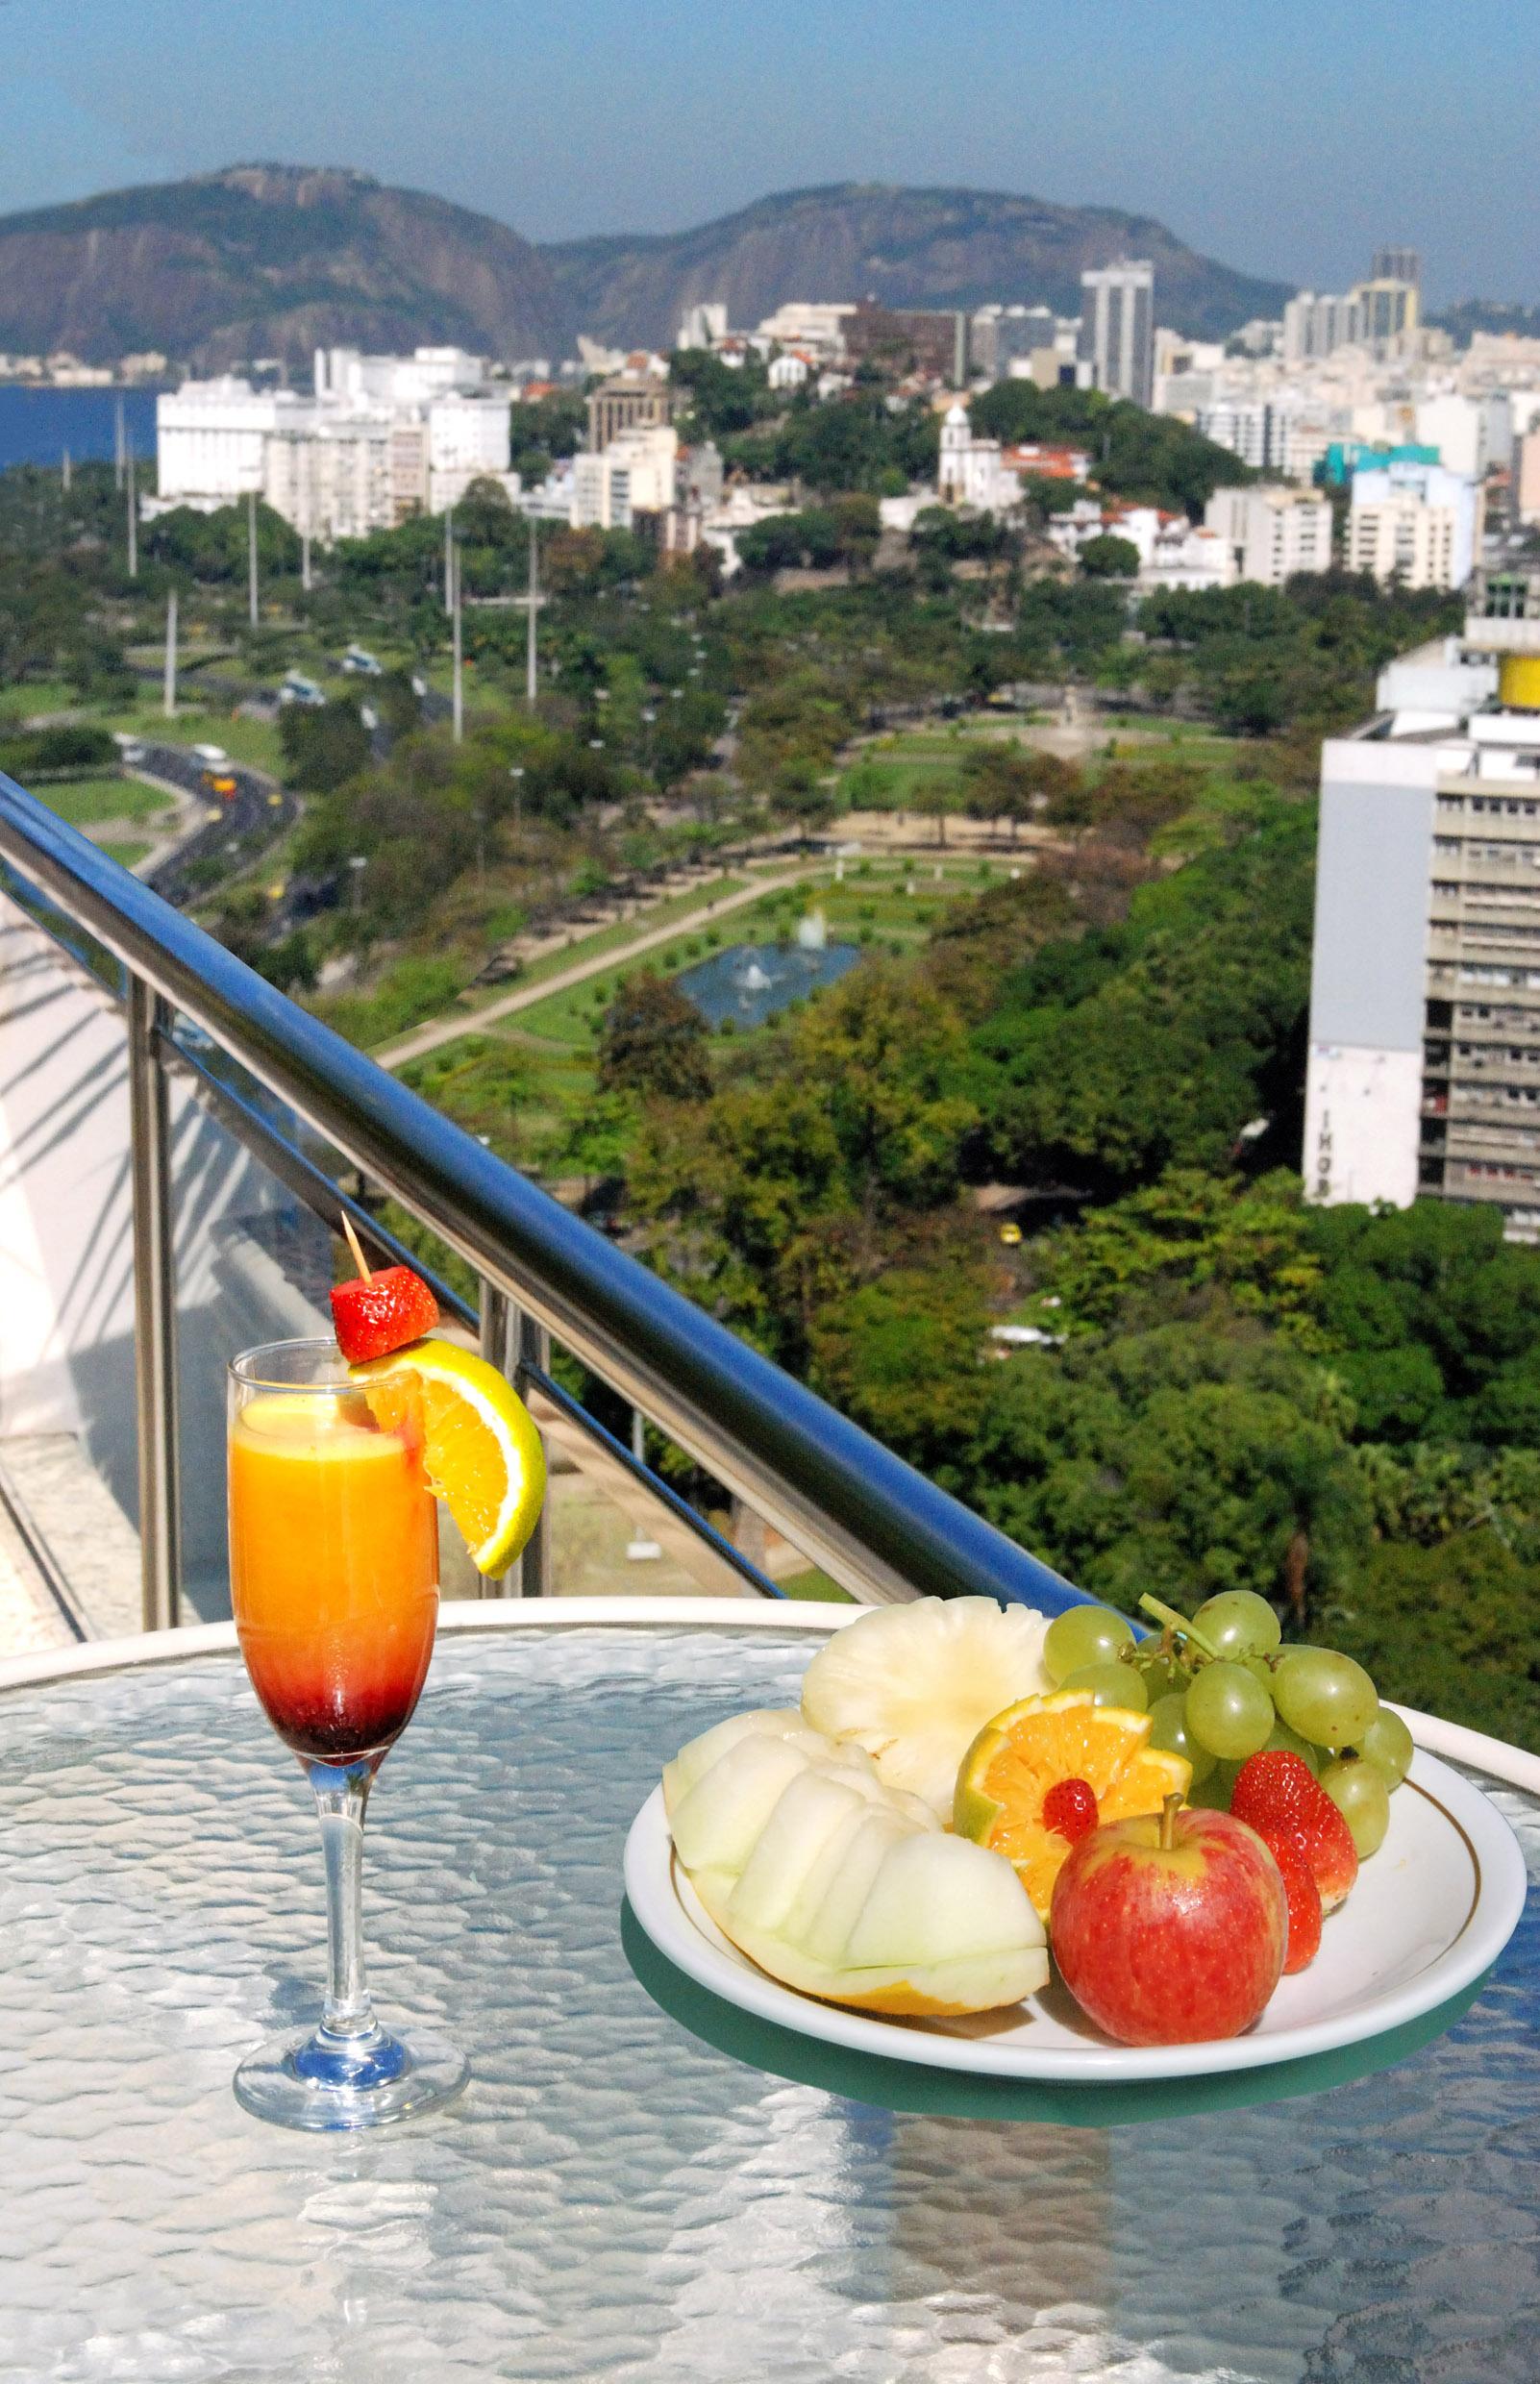 Windsor Asturias Hotel Ρίο ντε Τζανέιρο Εξωτερικό φωτογραφία